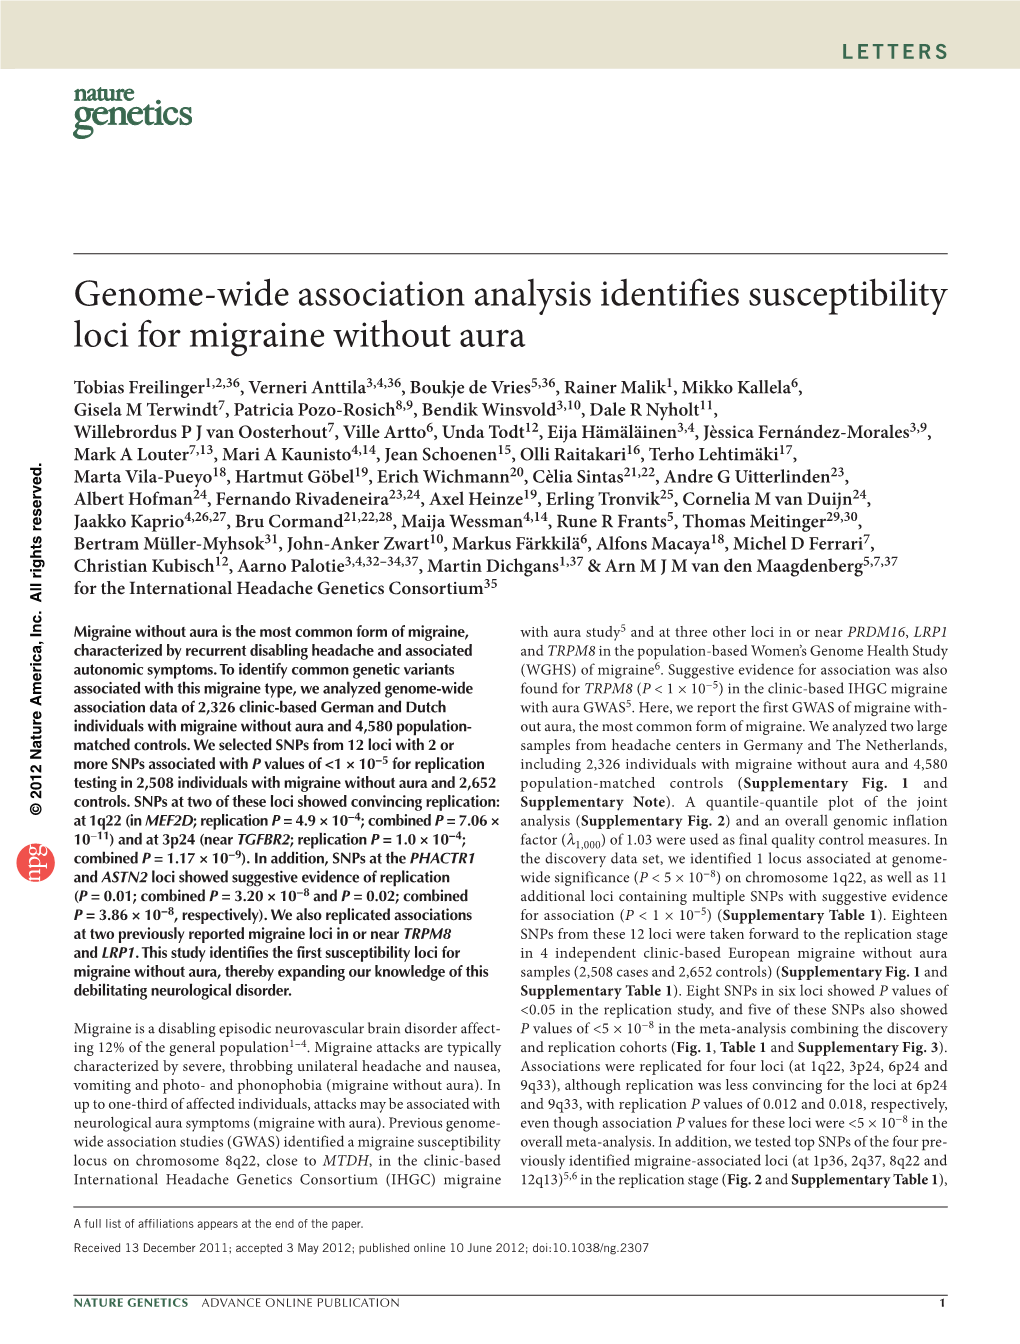 Genome-Wide Association Analysis Identifies Susceptibility Loci